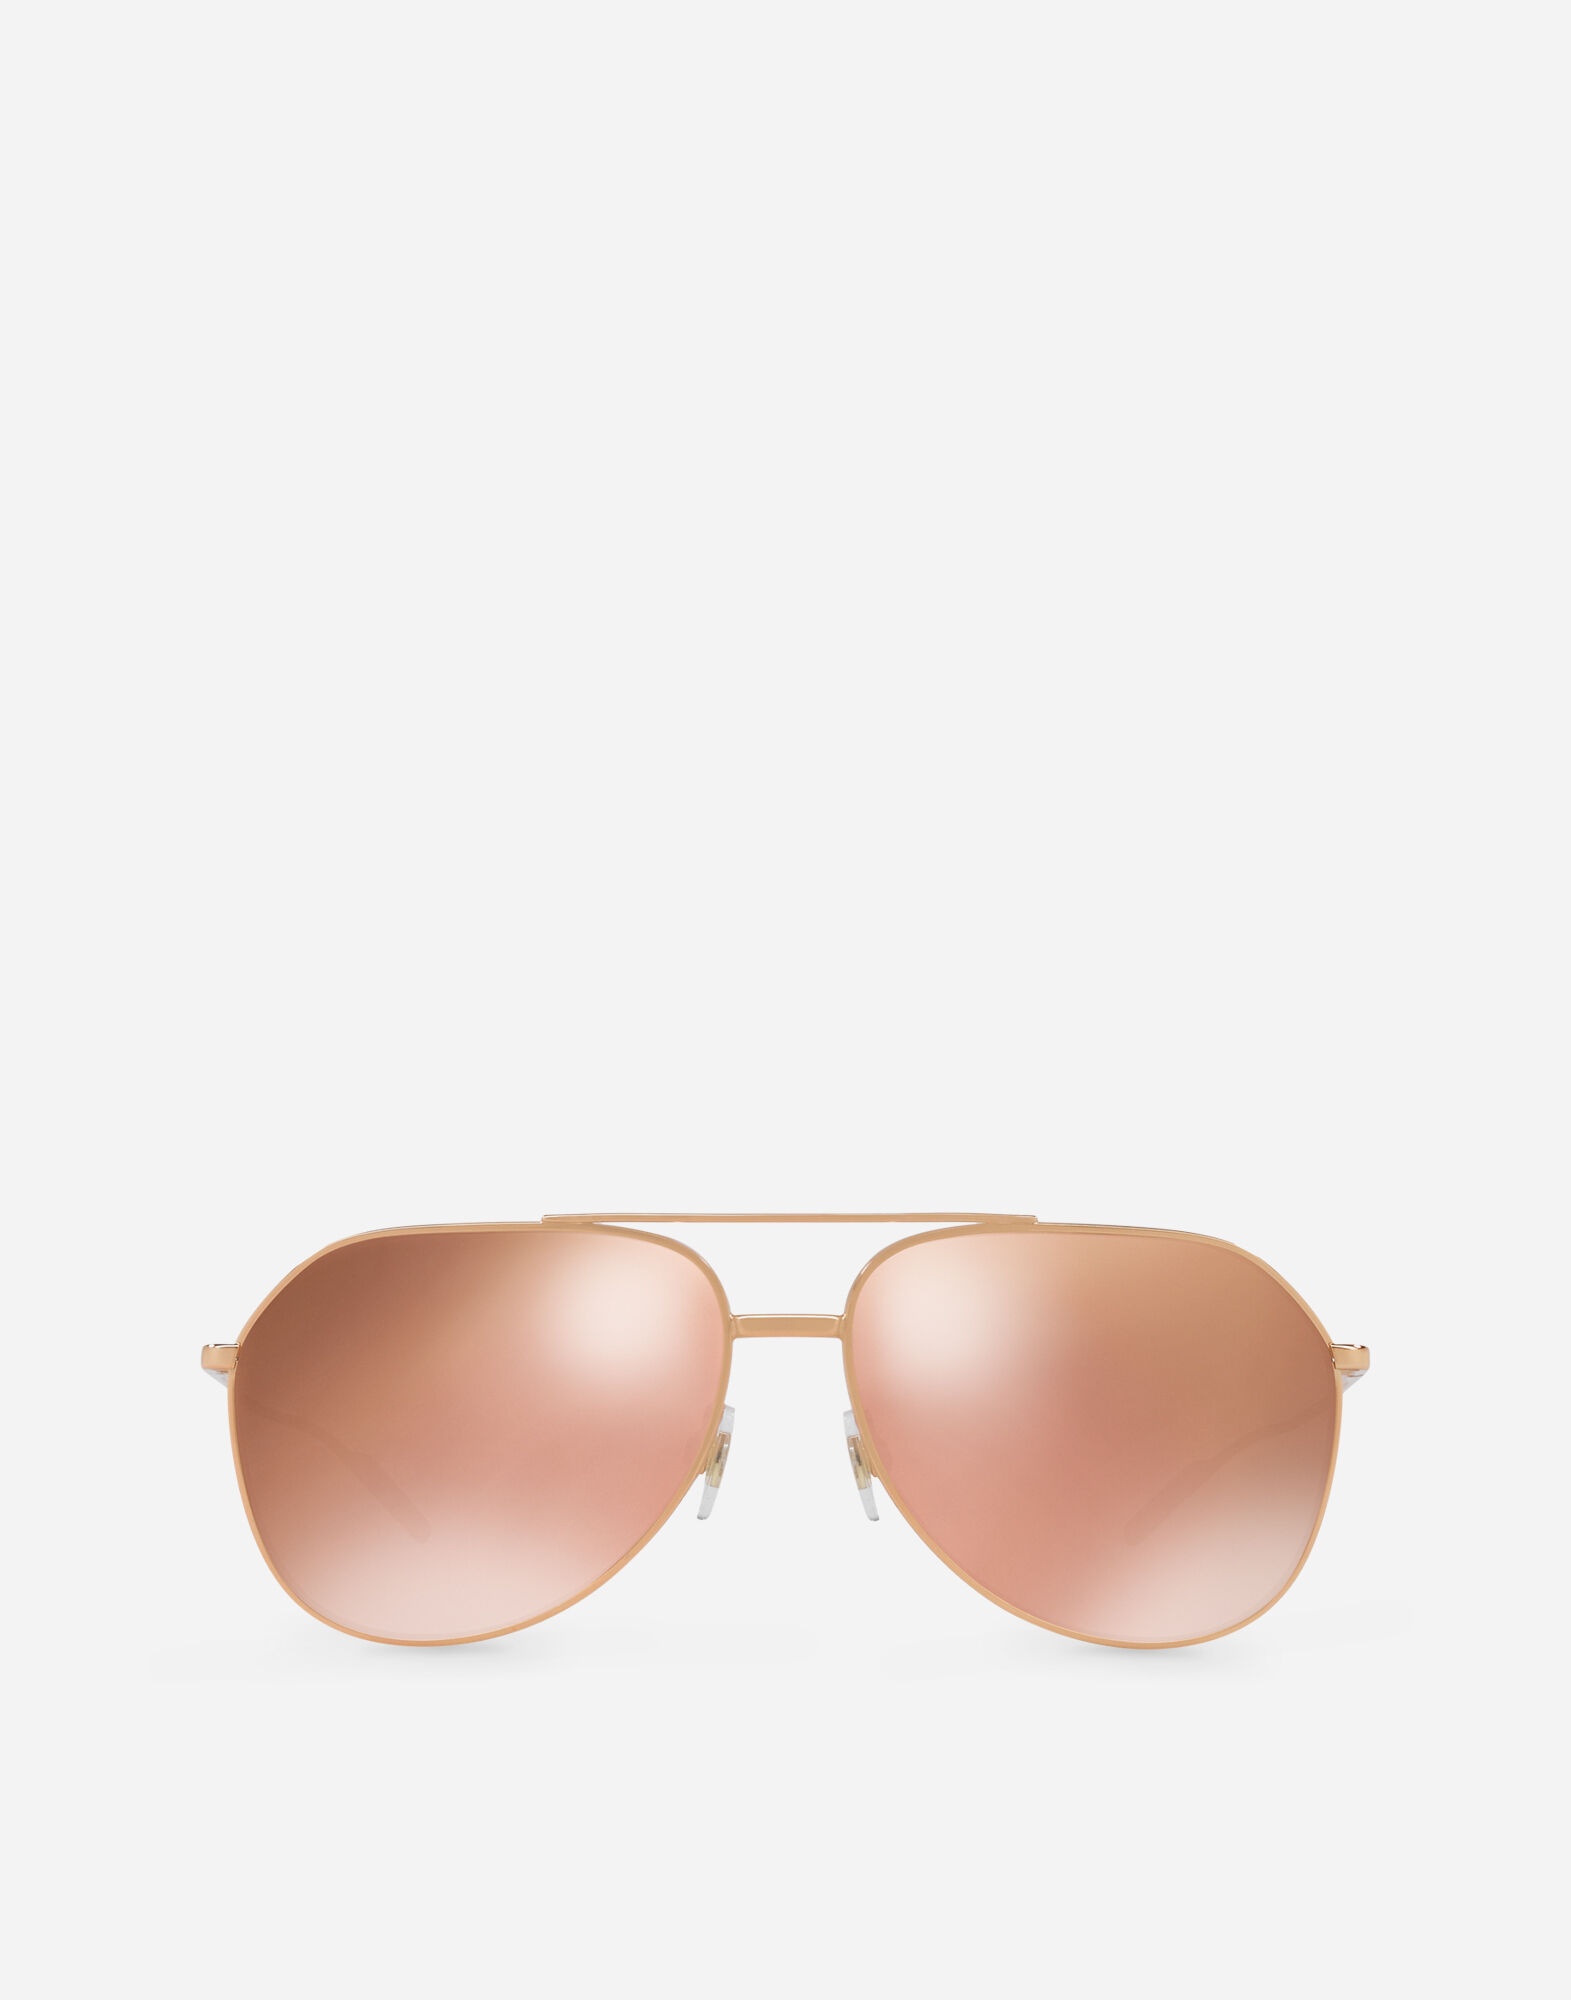 Gold edition sunglasses - 1